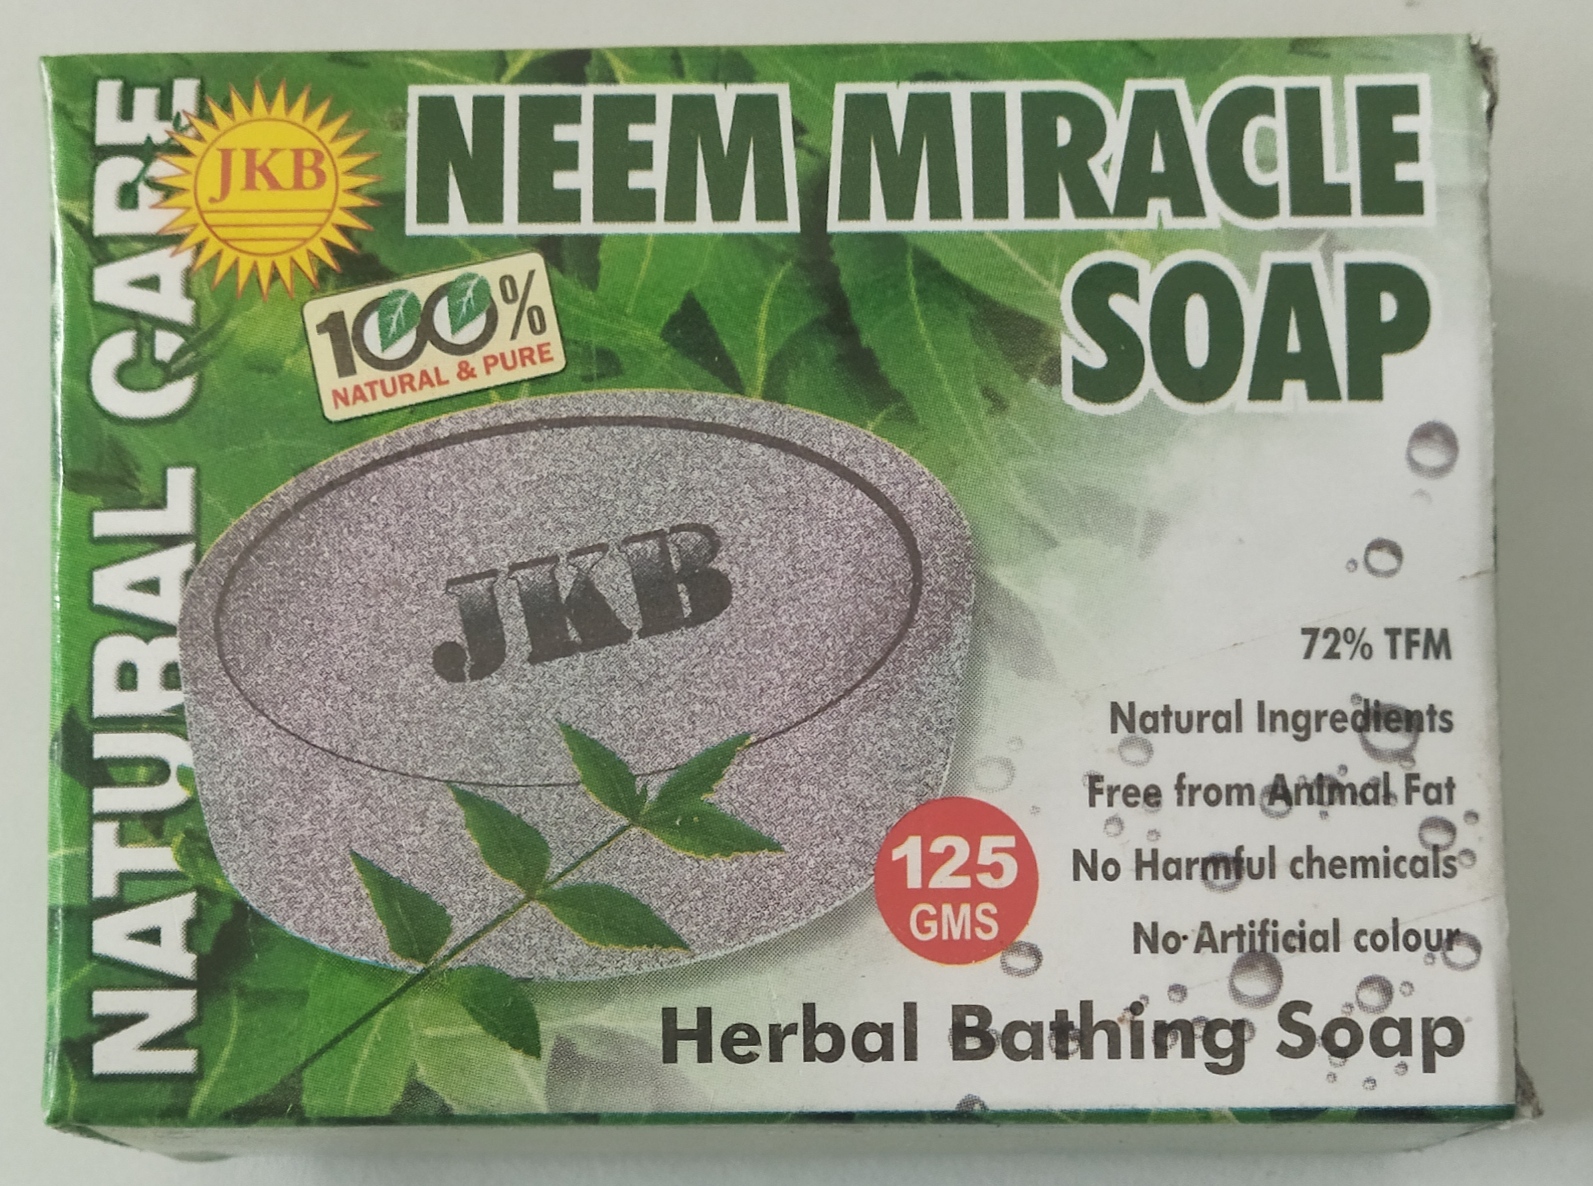 JKB neem miracle soap